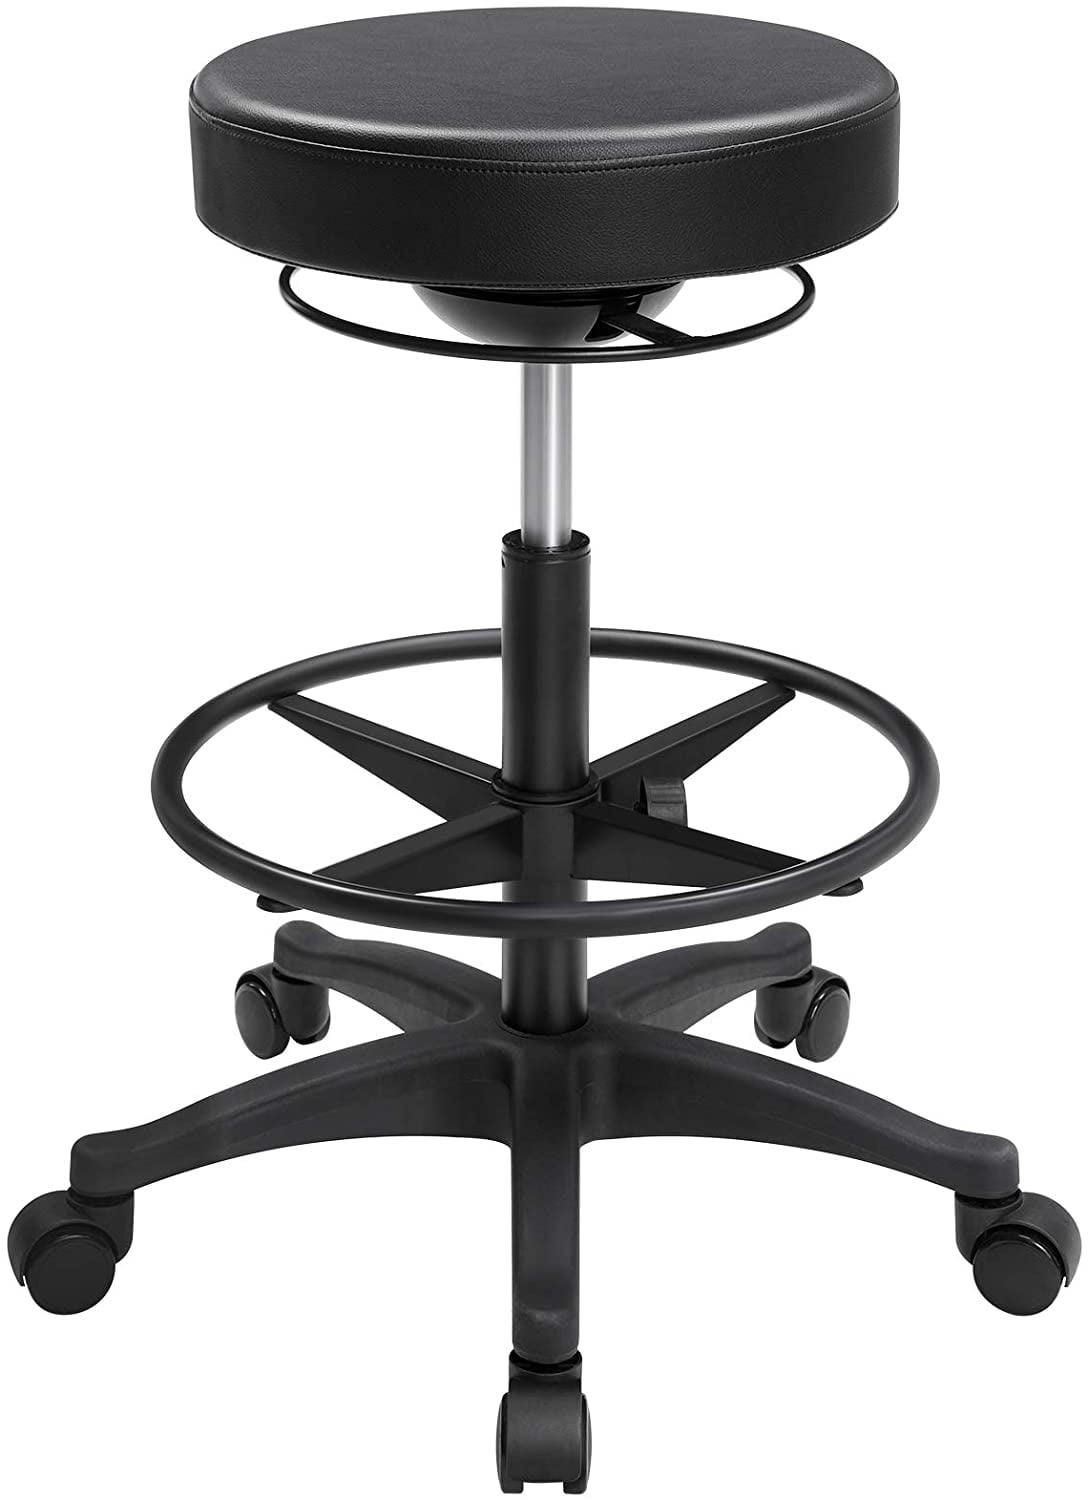 Black Nylon Five-star Base Load Capacity: 150 kg Max SONGMICS Office Chair PU Multicolor Swivel Ergonomic Chair with Foldable Armrests Blue OBG63BQUK